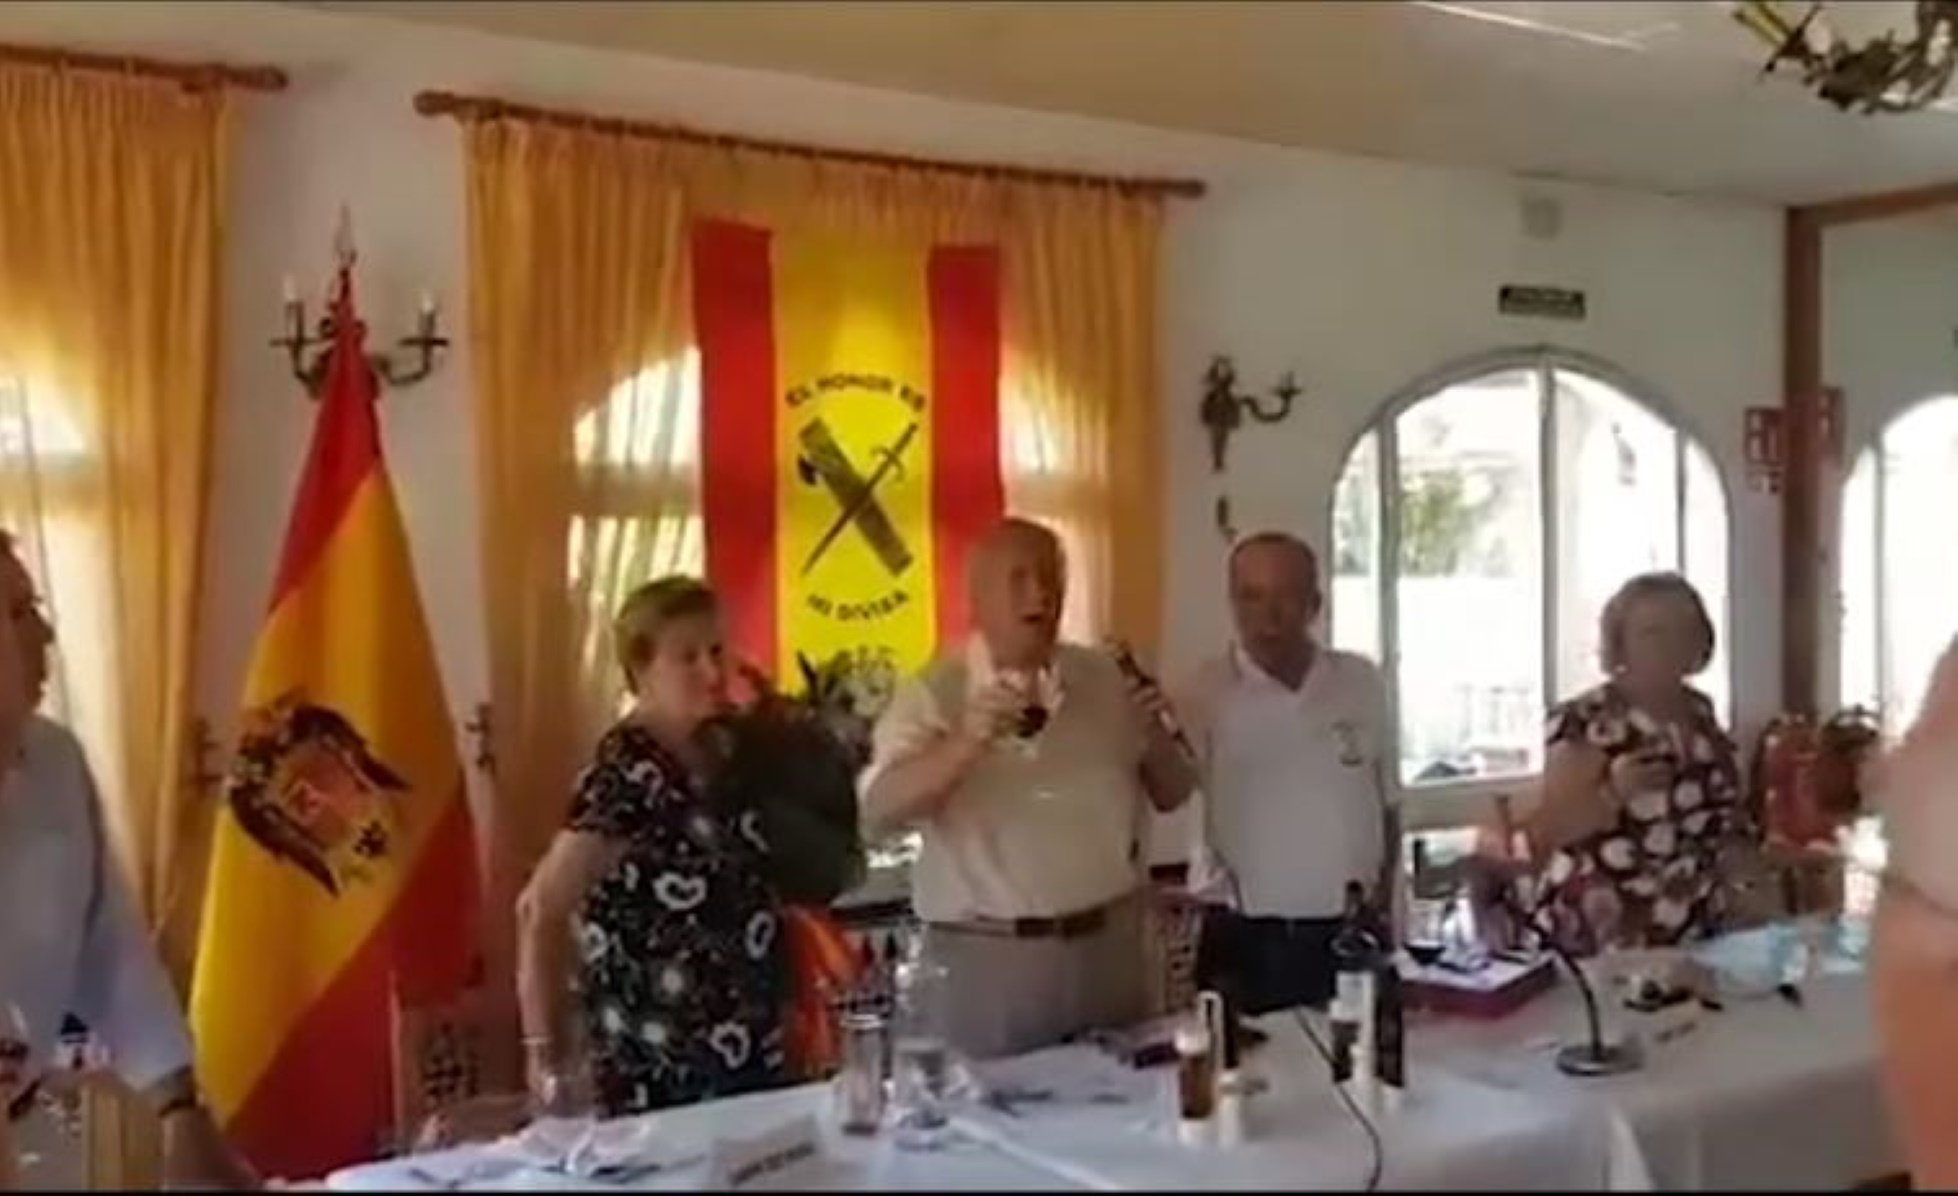 El golpista Tejero reaparece al grito de "Viva Franco" y "Viva la Guardia Civil"